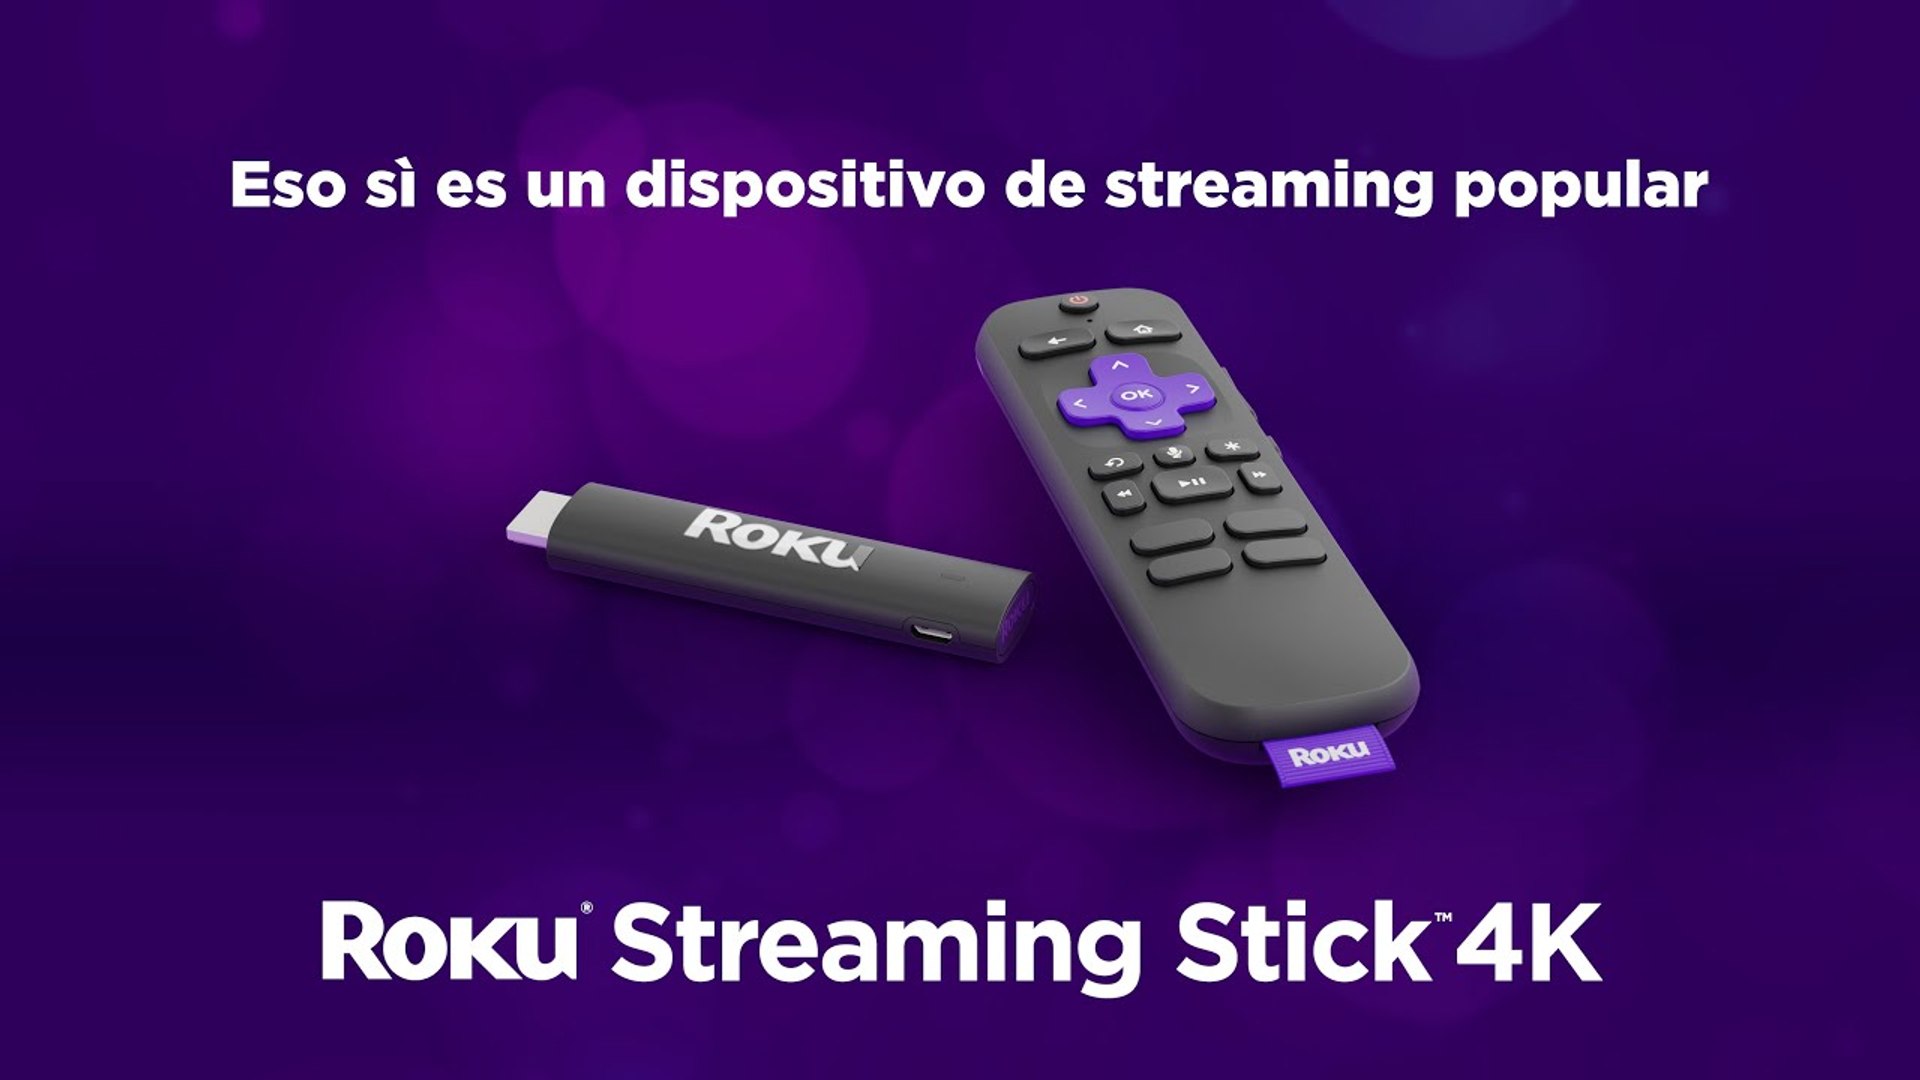 Nuevo dispositivo Roku Streaming Stick 4K - Vídeo Dailymotion